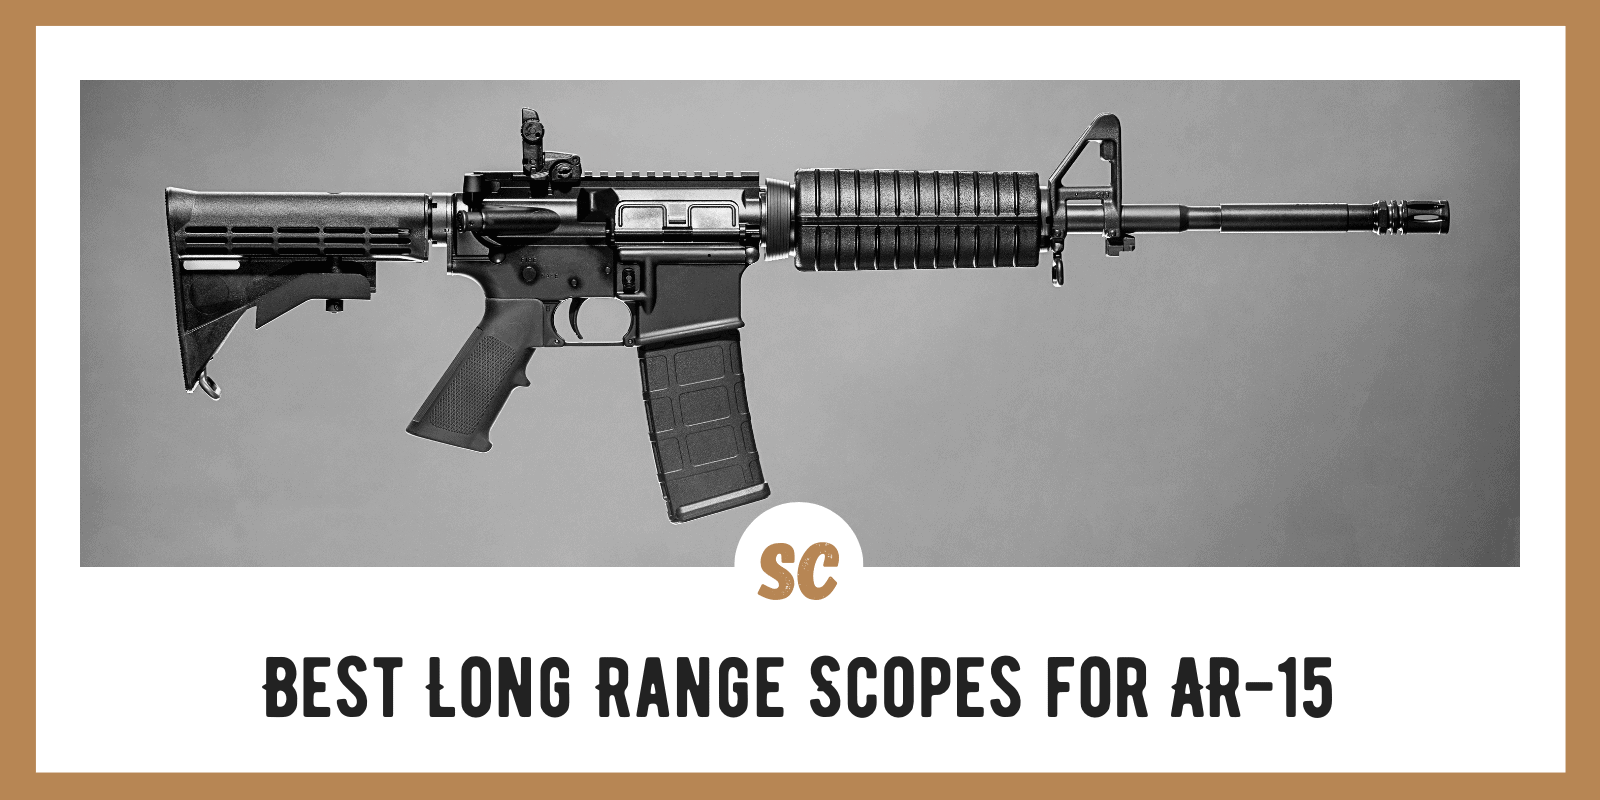 Guide to Long Range Scopes for AR-15: Top 4 Picks, Factors